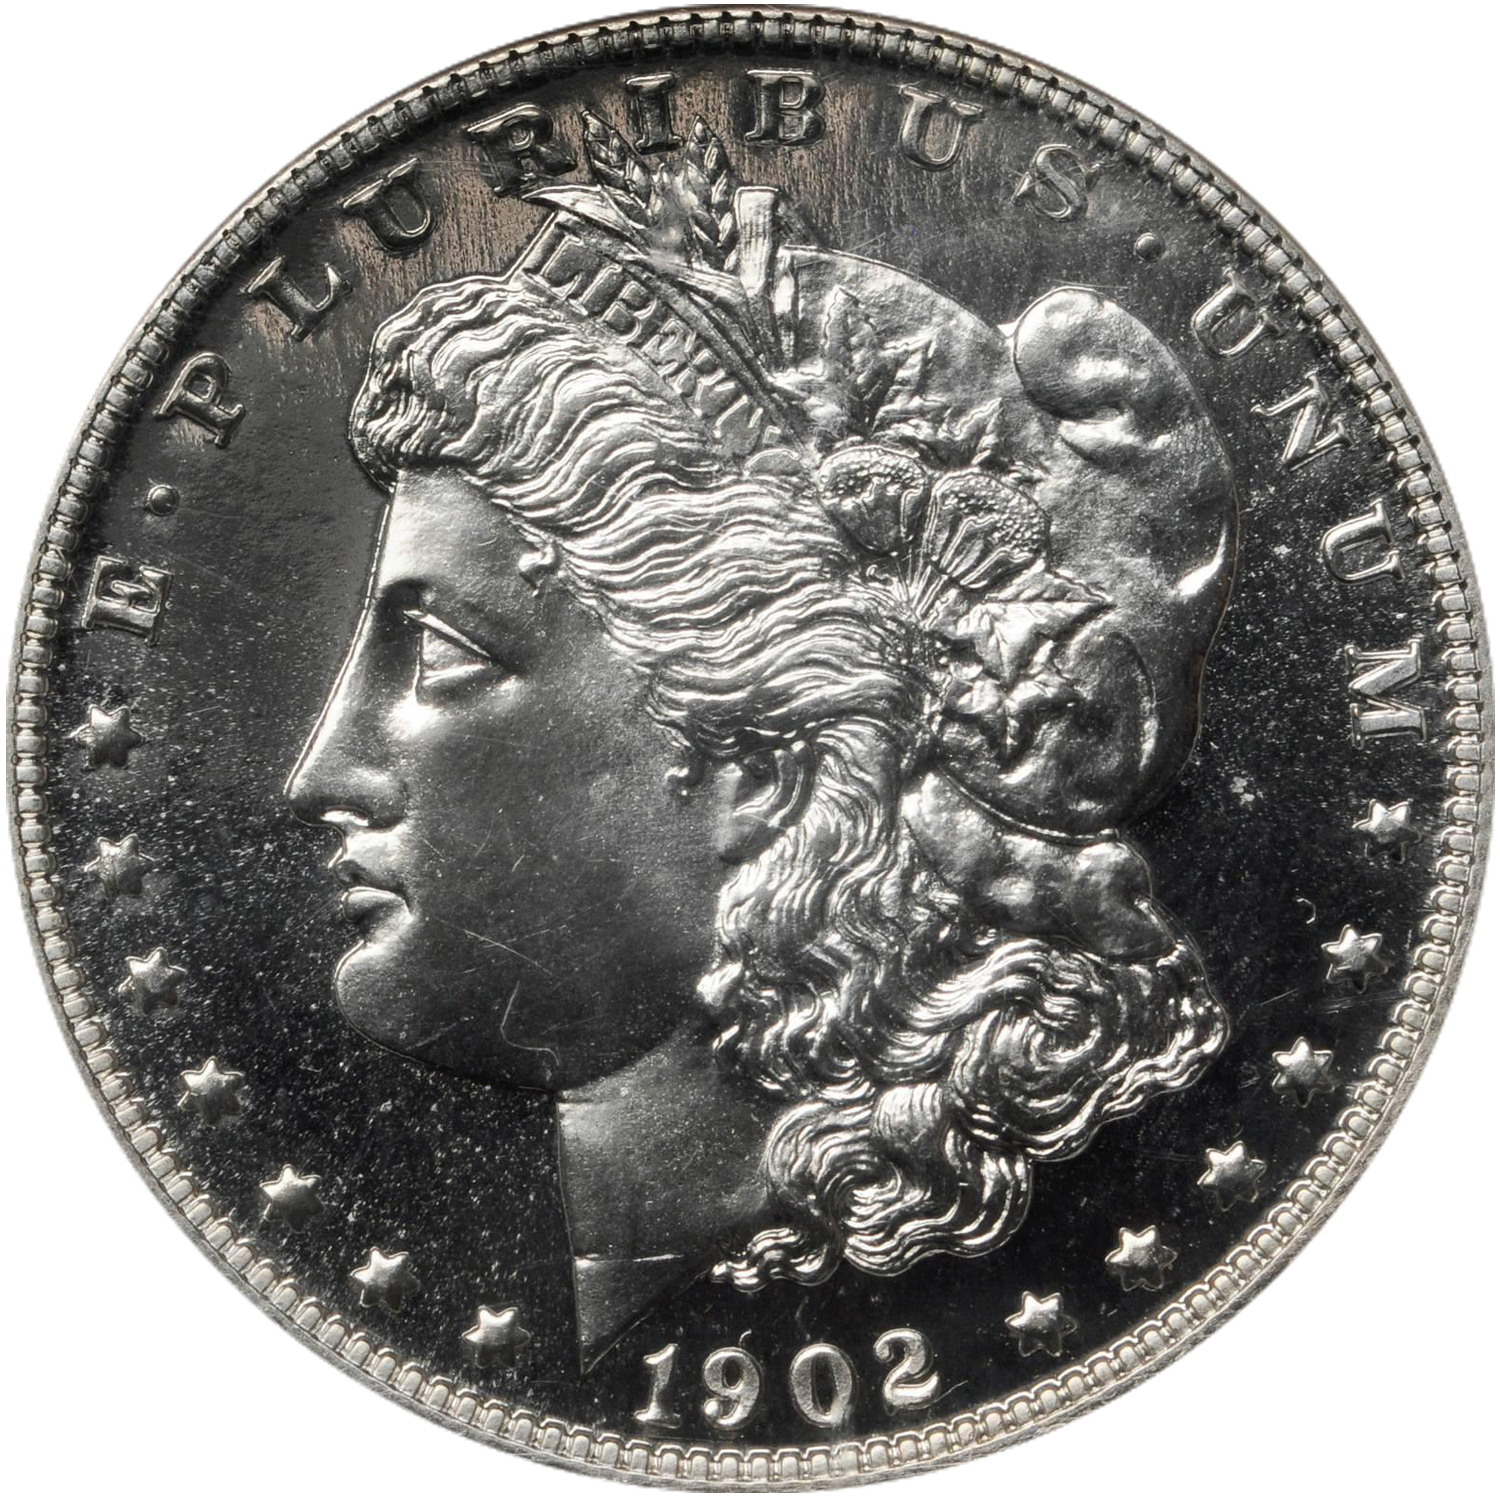 1902 p mint morgan dollar price guide value